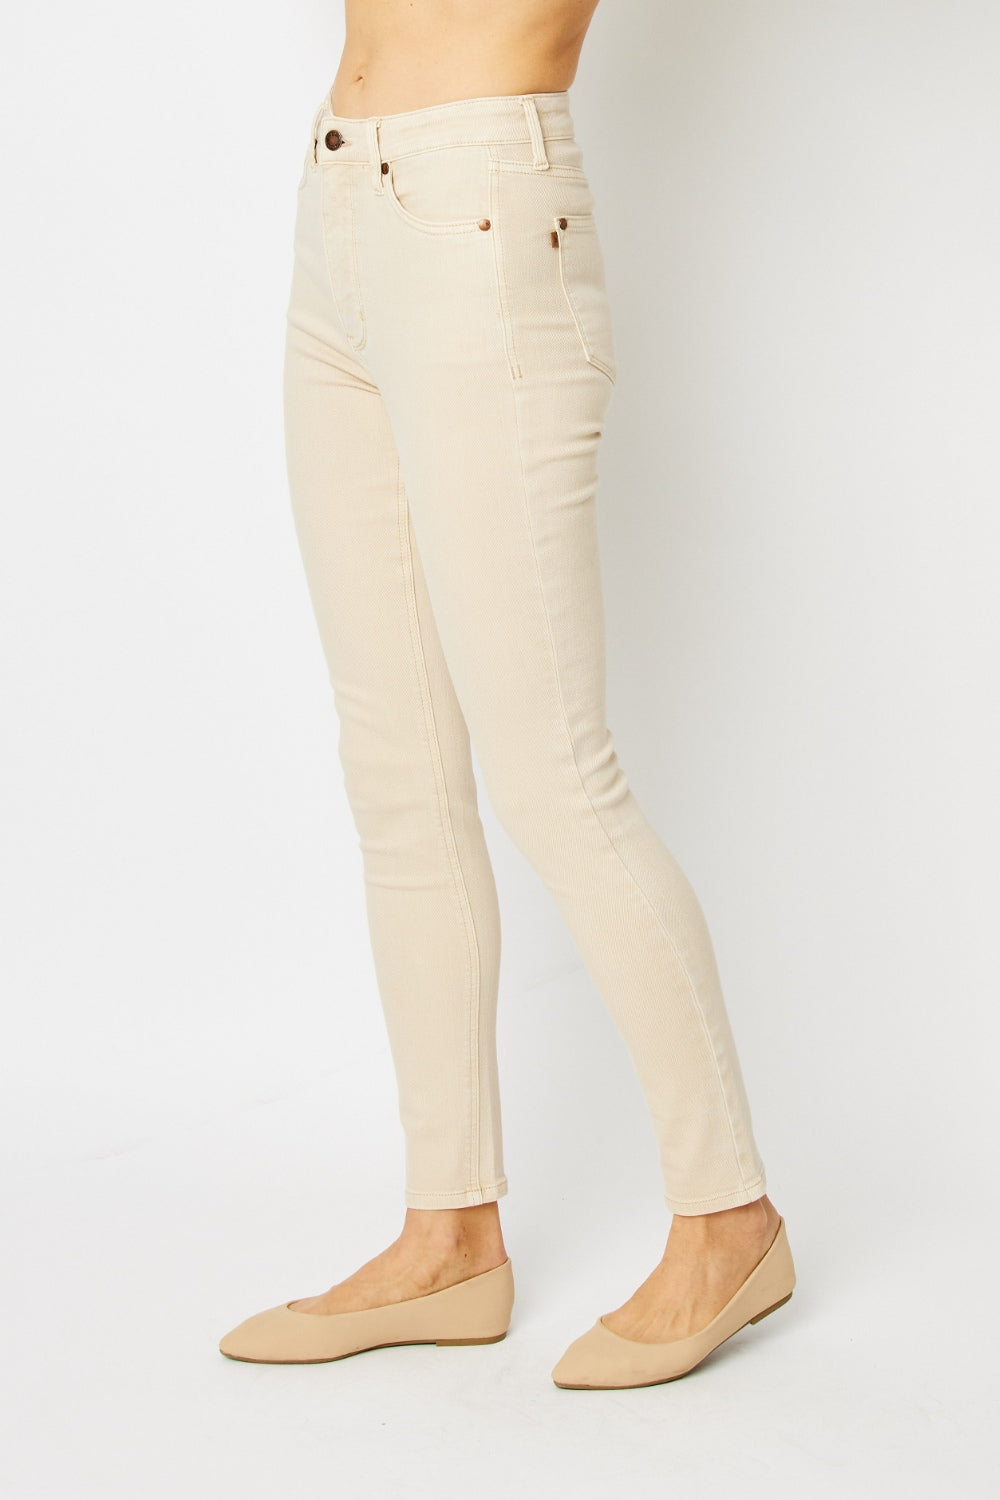 Judy Blue Full Size Garment Dyed Tummy Control Skinny Jeans - Tigbuls Variety Fashion